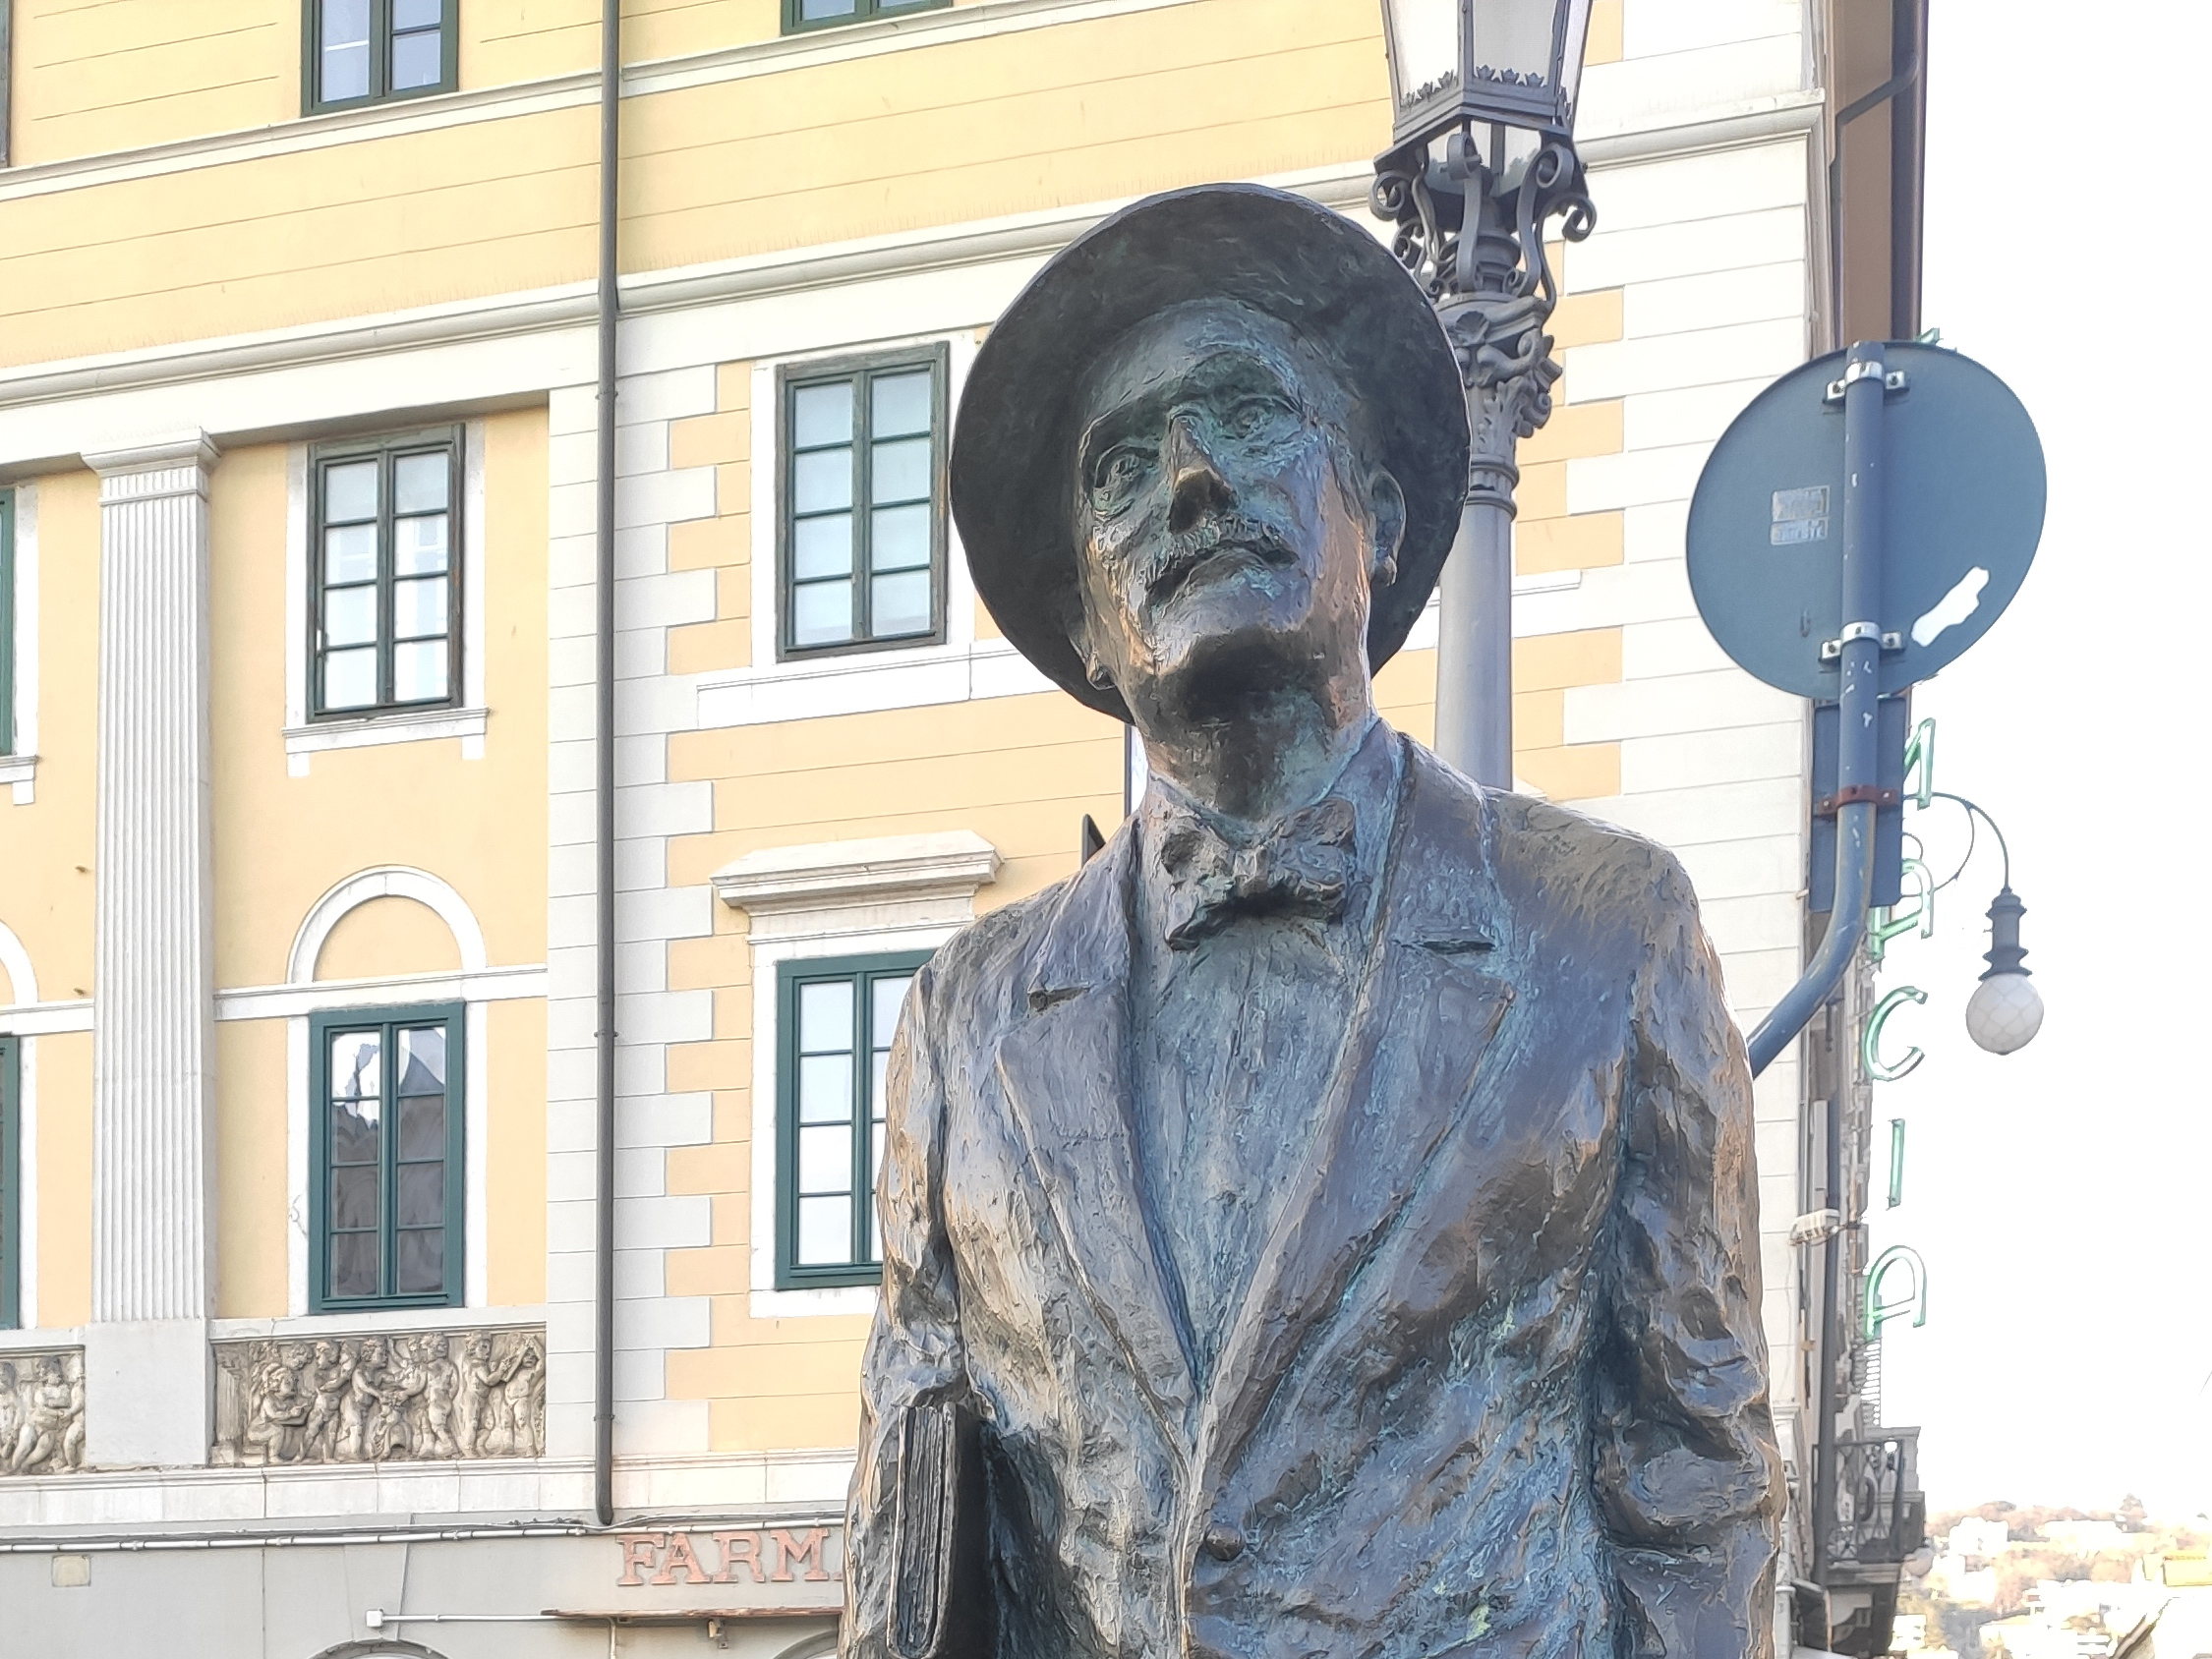 James Joyce's statue in Ponterosso, Trieste